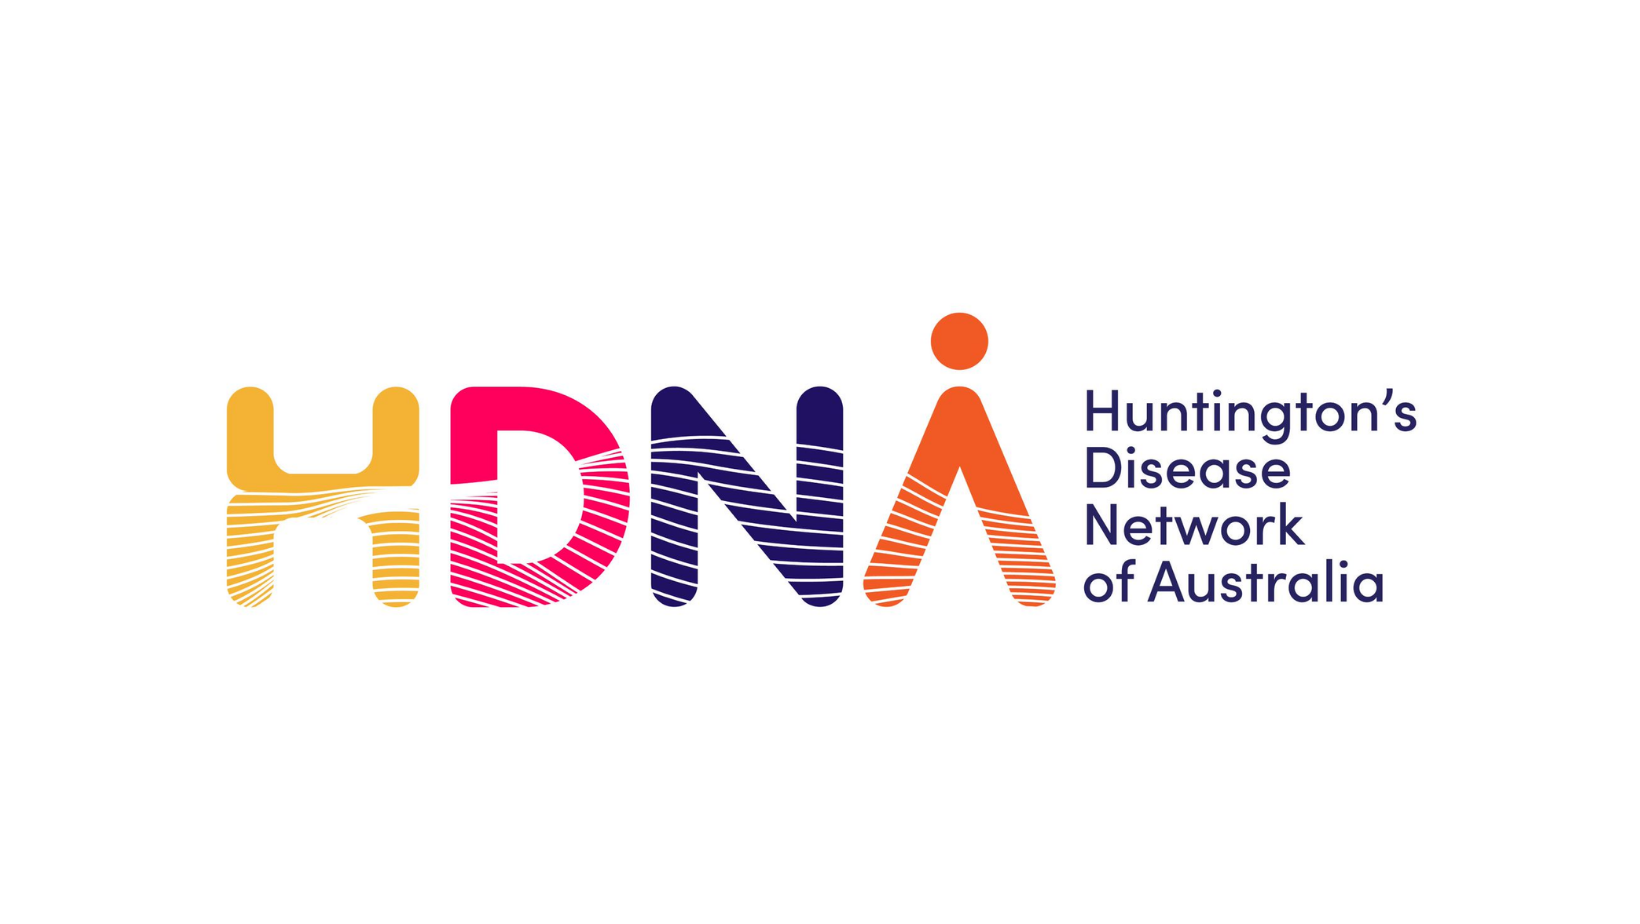 Huntington's Disease Network of Australia